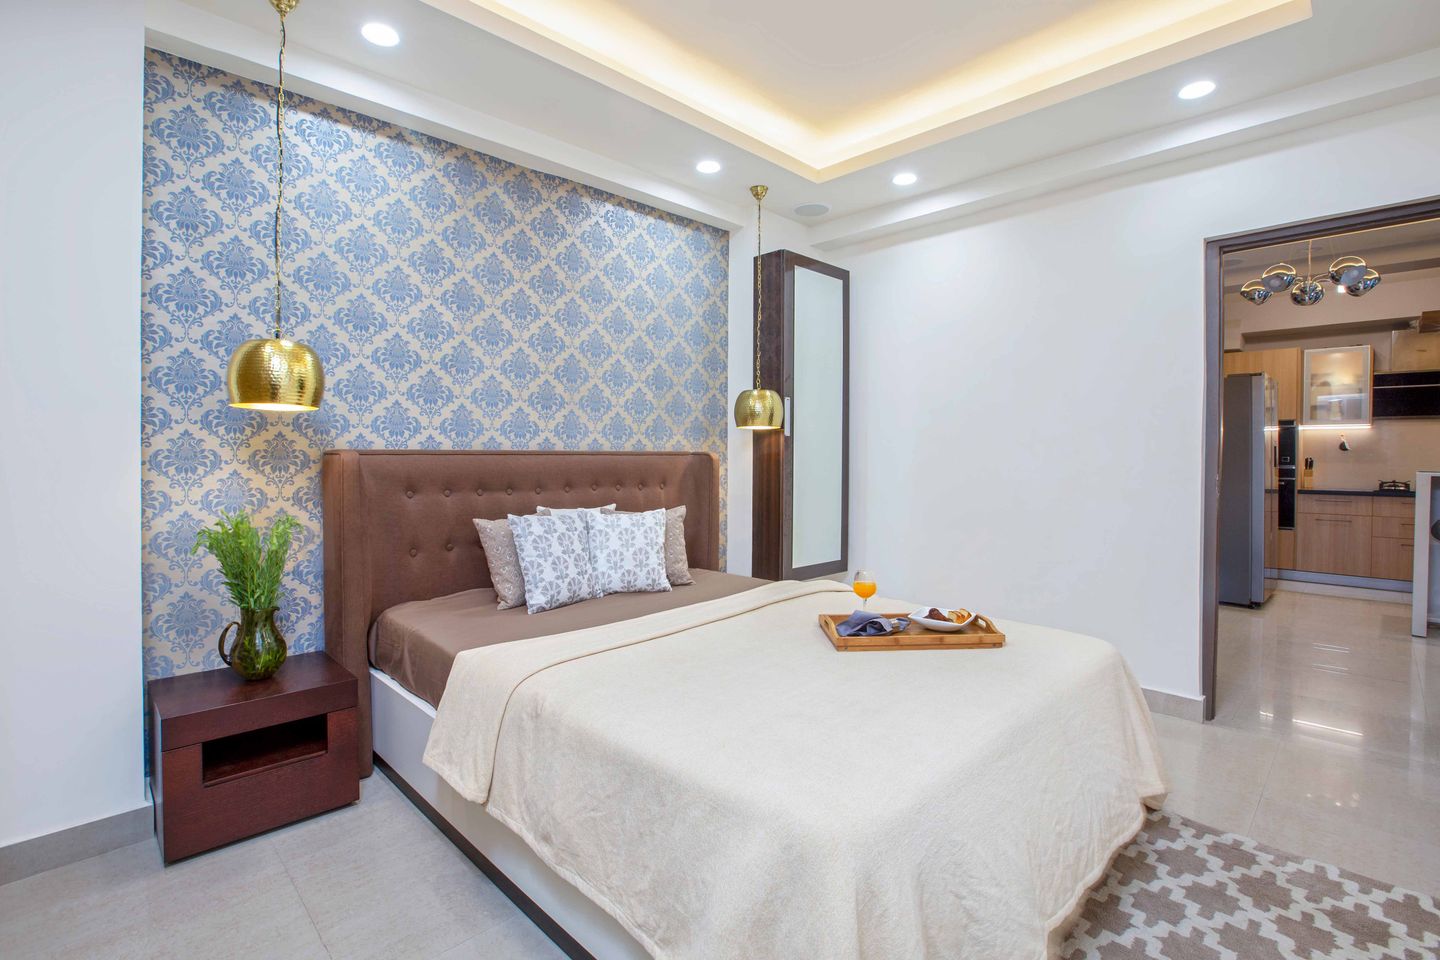 9x9 Ft  Guest Bedroom Design With Blue And Beige Damask Wallpaper - Livspace